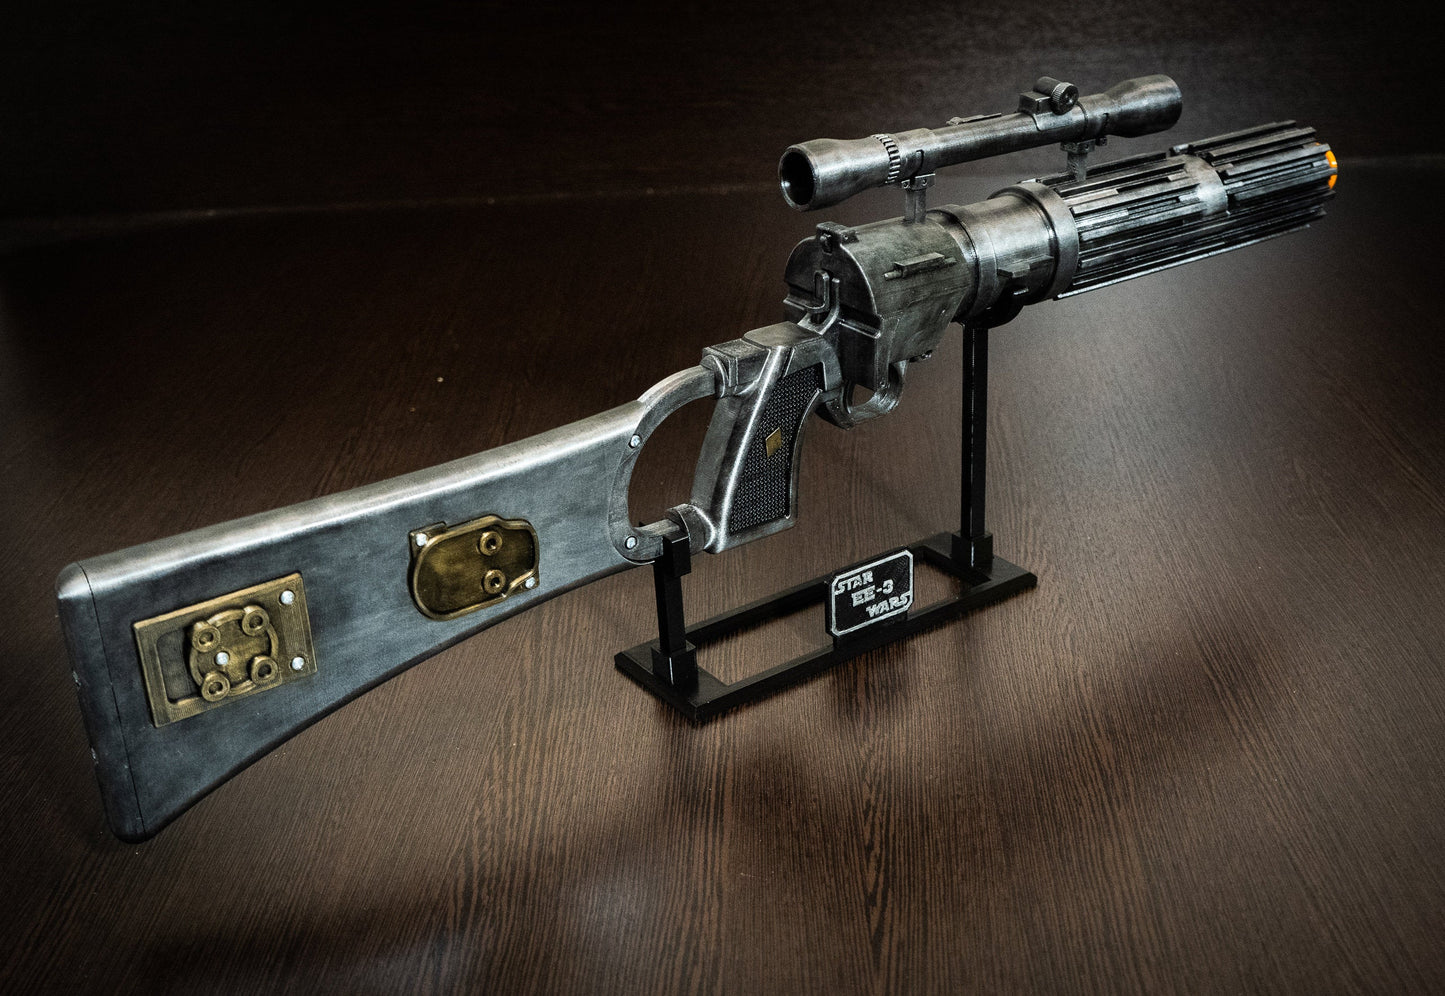 EE-3 Boba Fett blaster from Star Wars | Cosplay Prop Replica blaster - 3DPrintProps